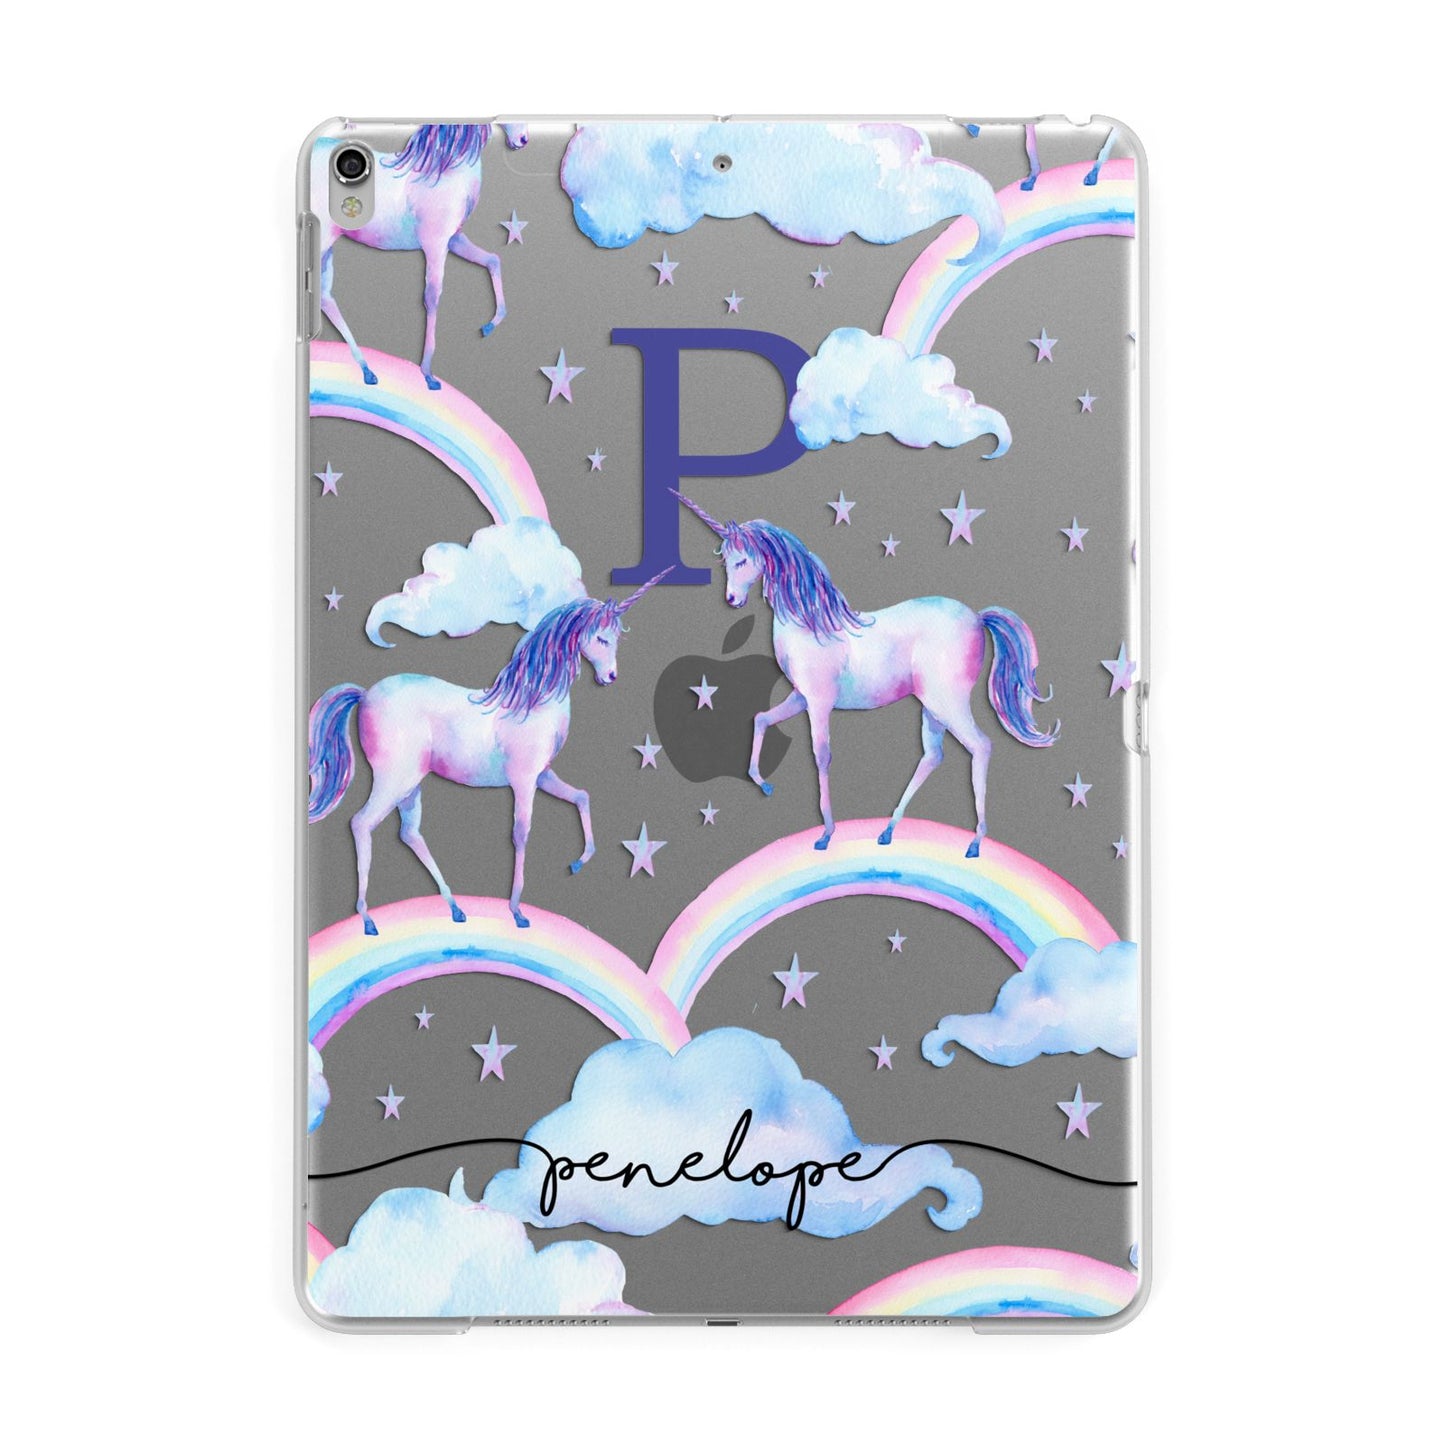 Personalised Unicorn Initial Apple iPad Silver Case